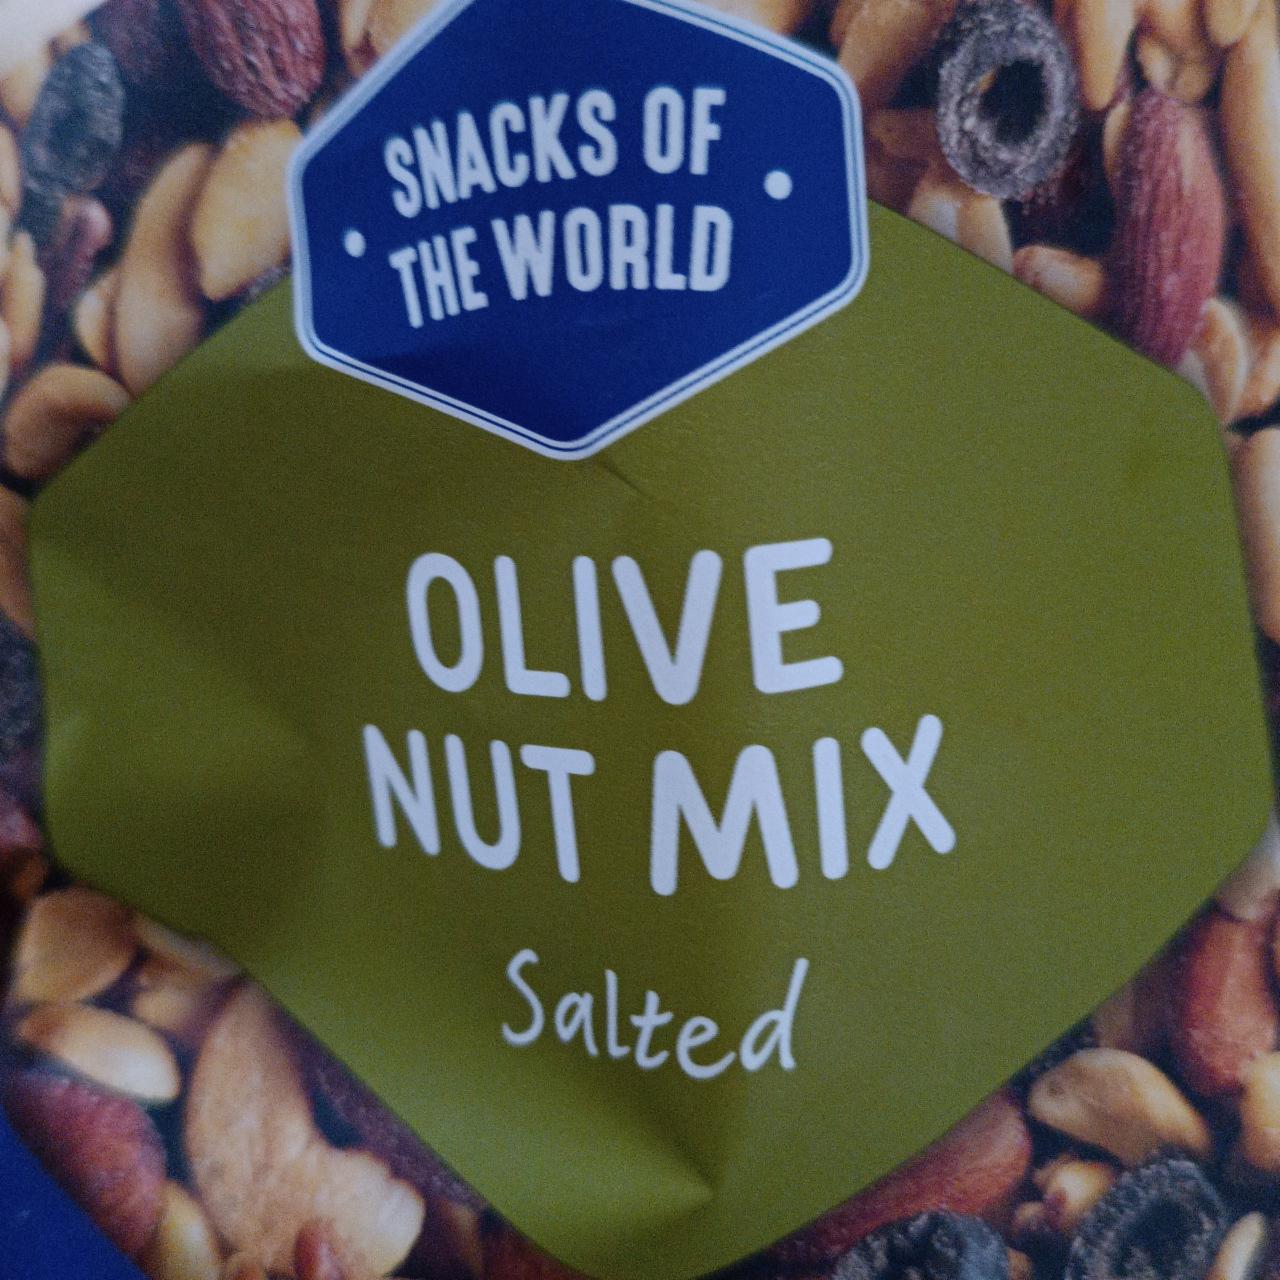 Fotografie - Olive nut mix salted Snacks of the world